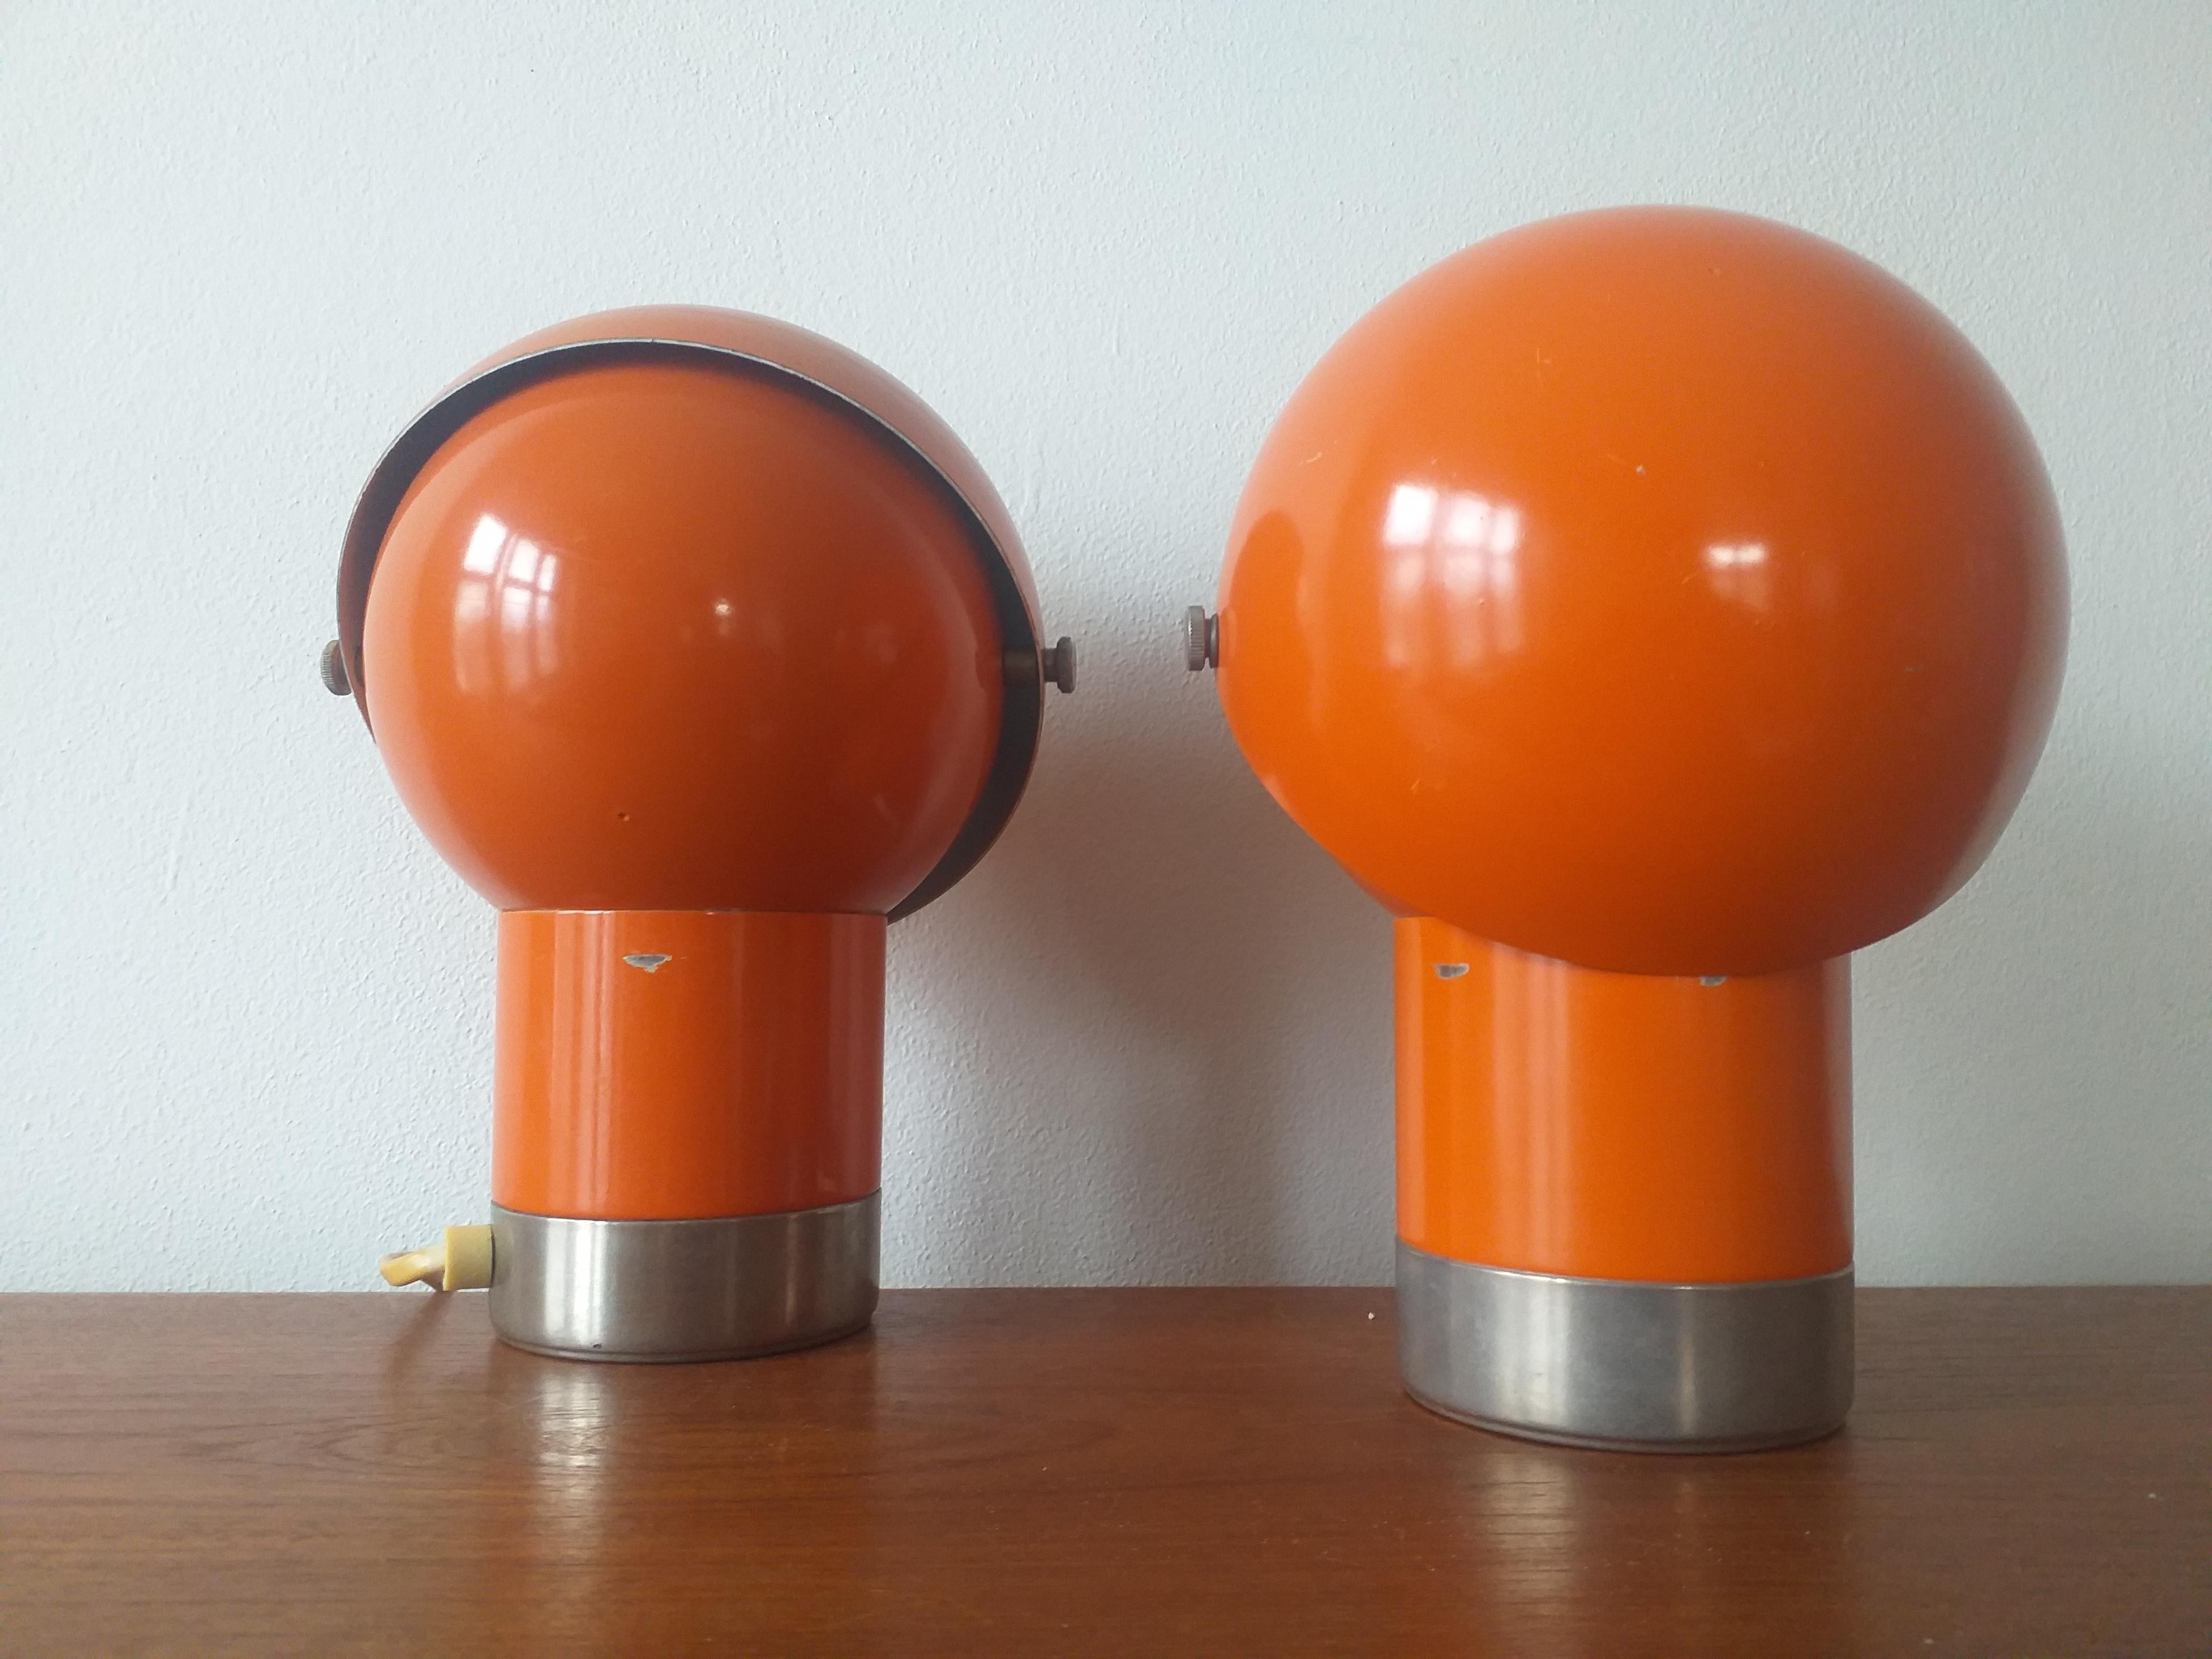 Czech Pair of Midcentury Table Lamps Designed by Pavel Grus, Kamenicky Senov, 1960s